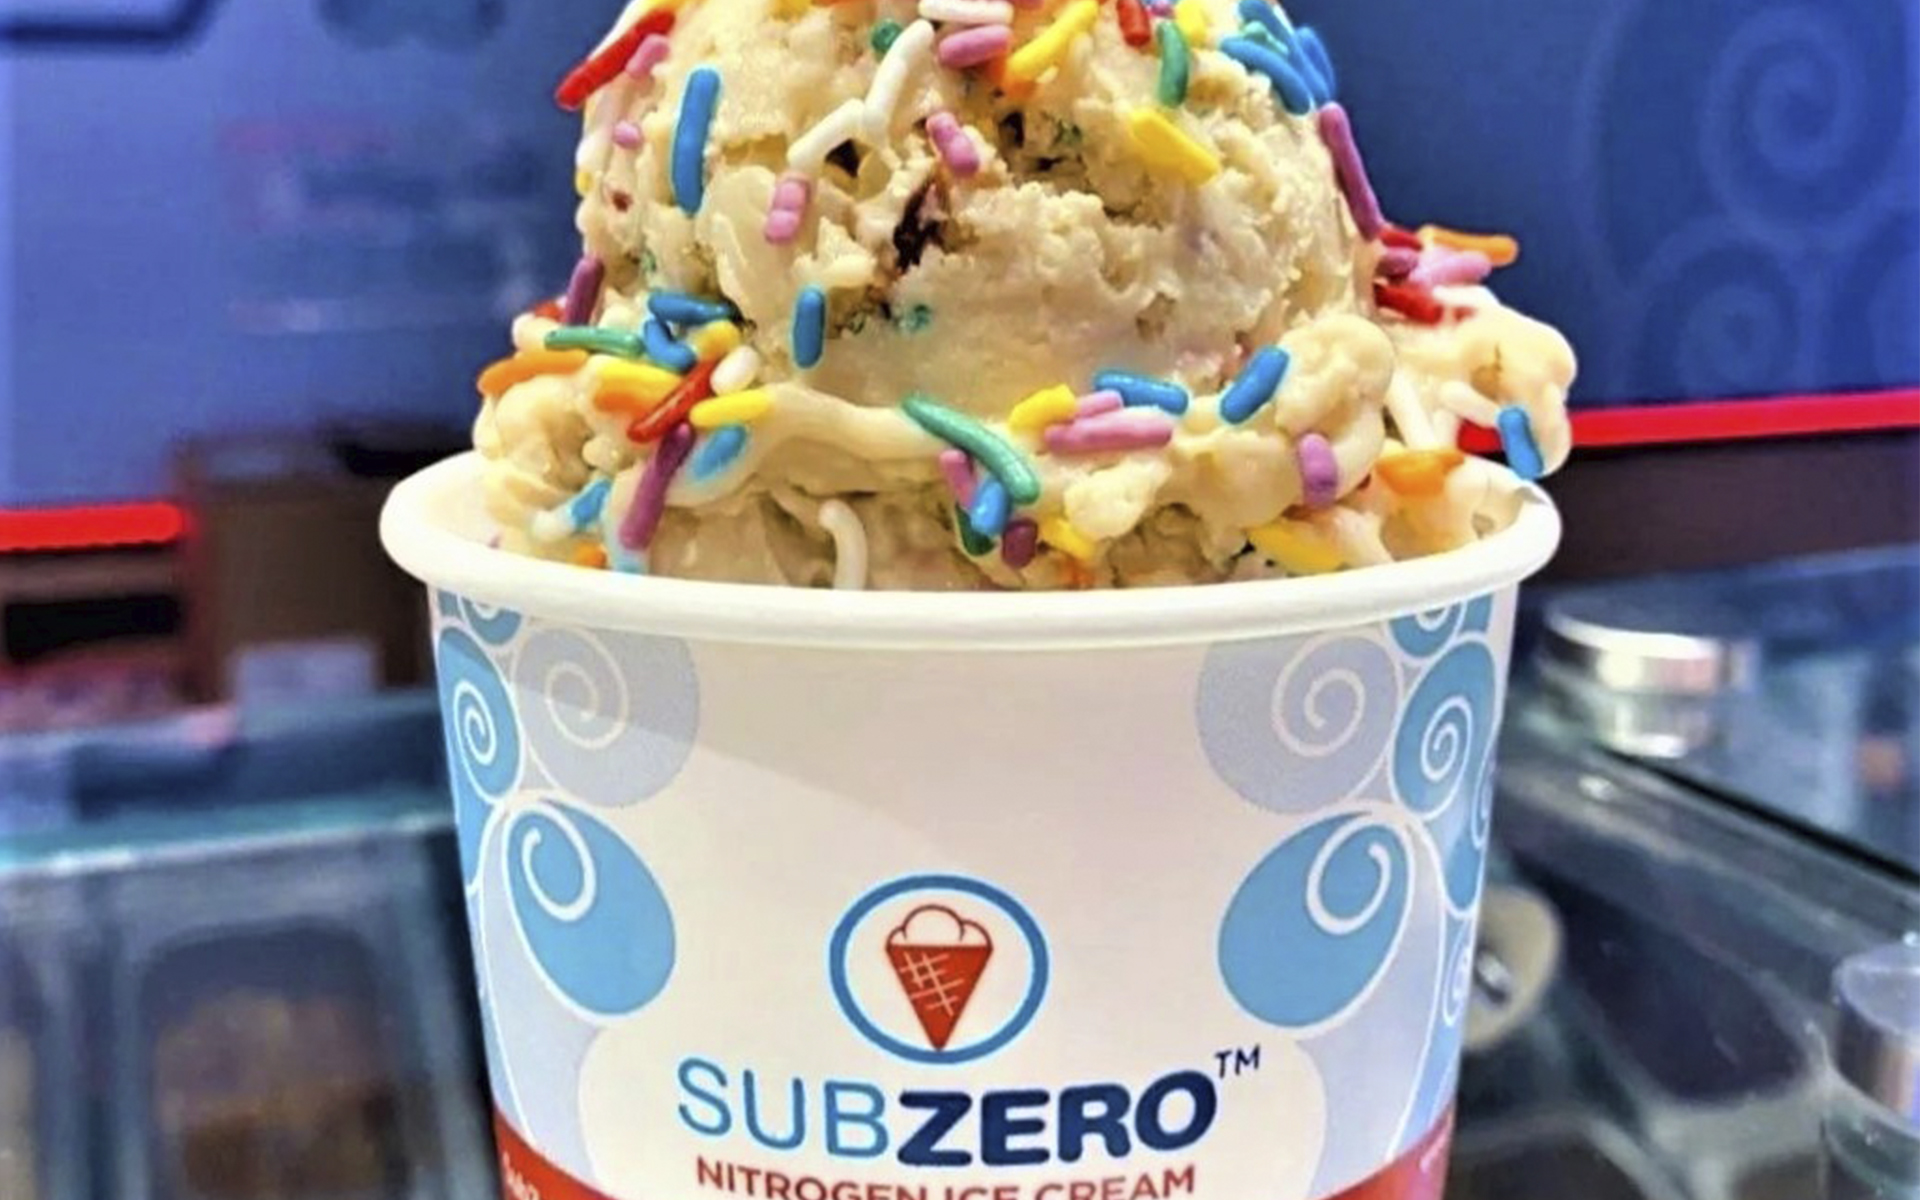 Sub Zero Nitrogen Ice Cream in Manchester, NH at Restaurant.com